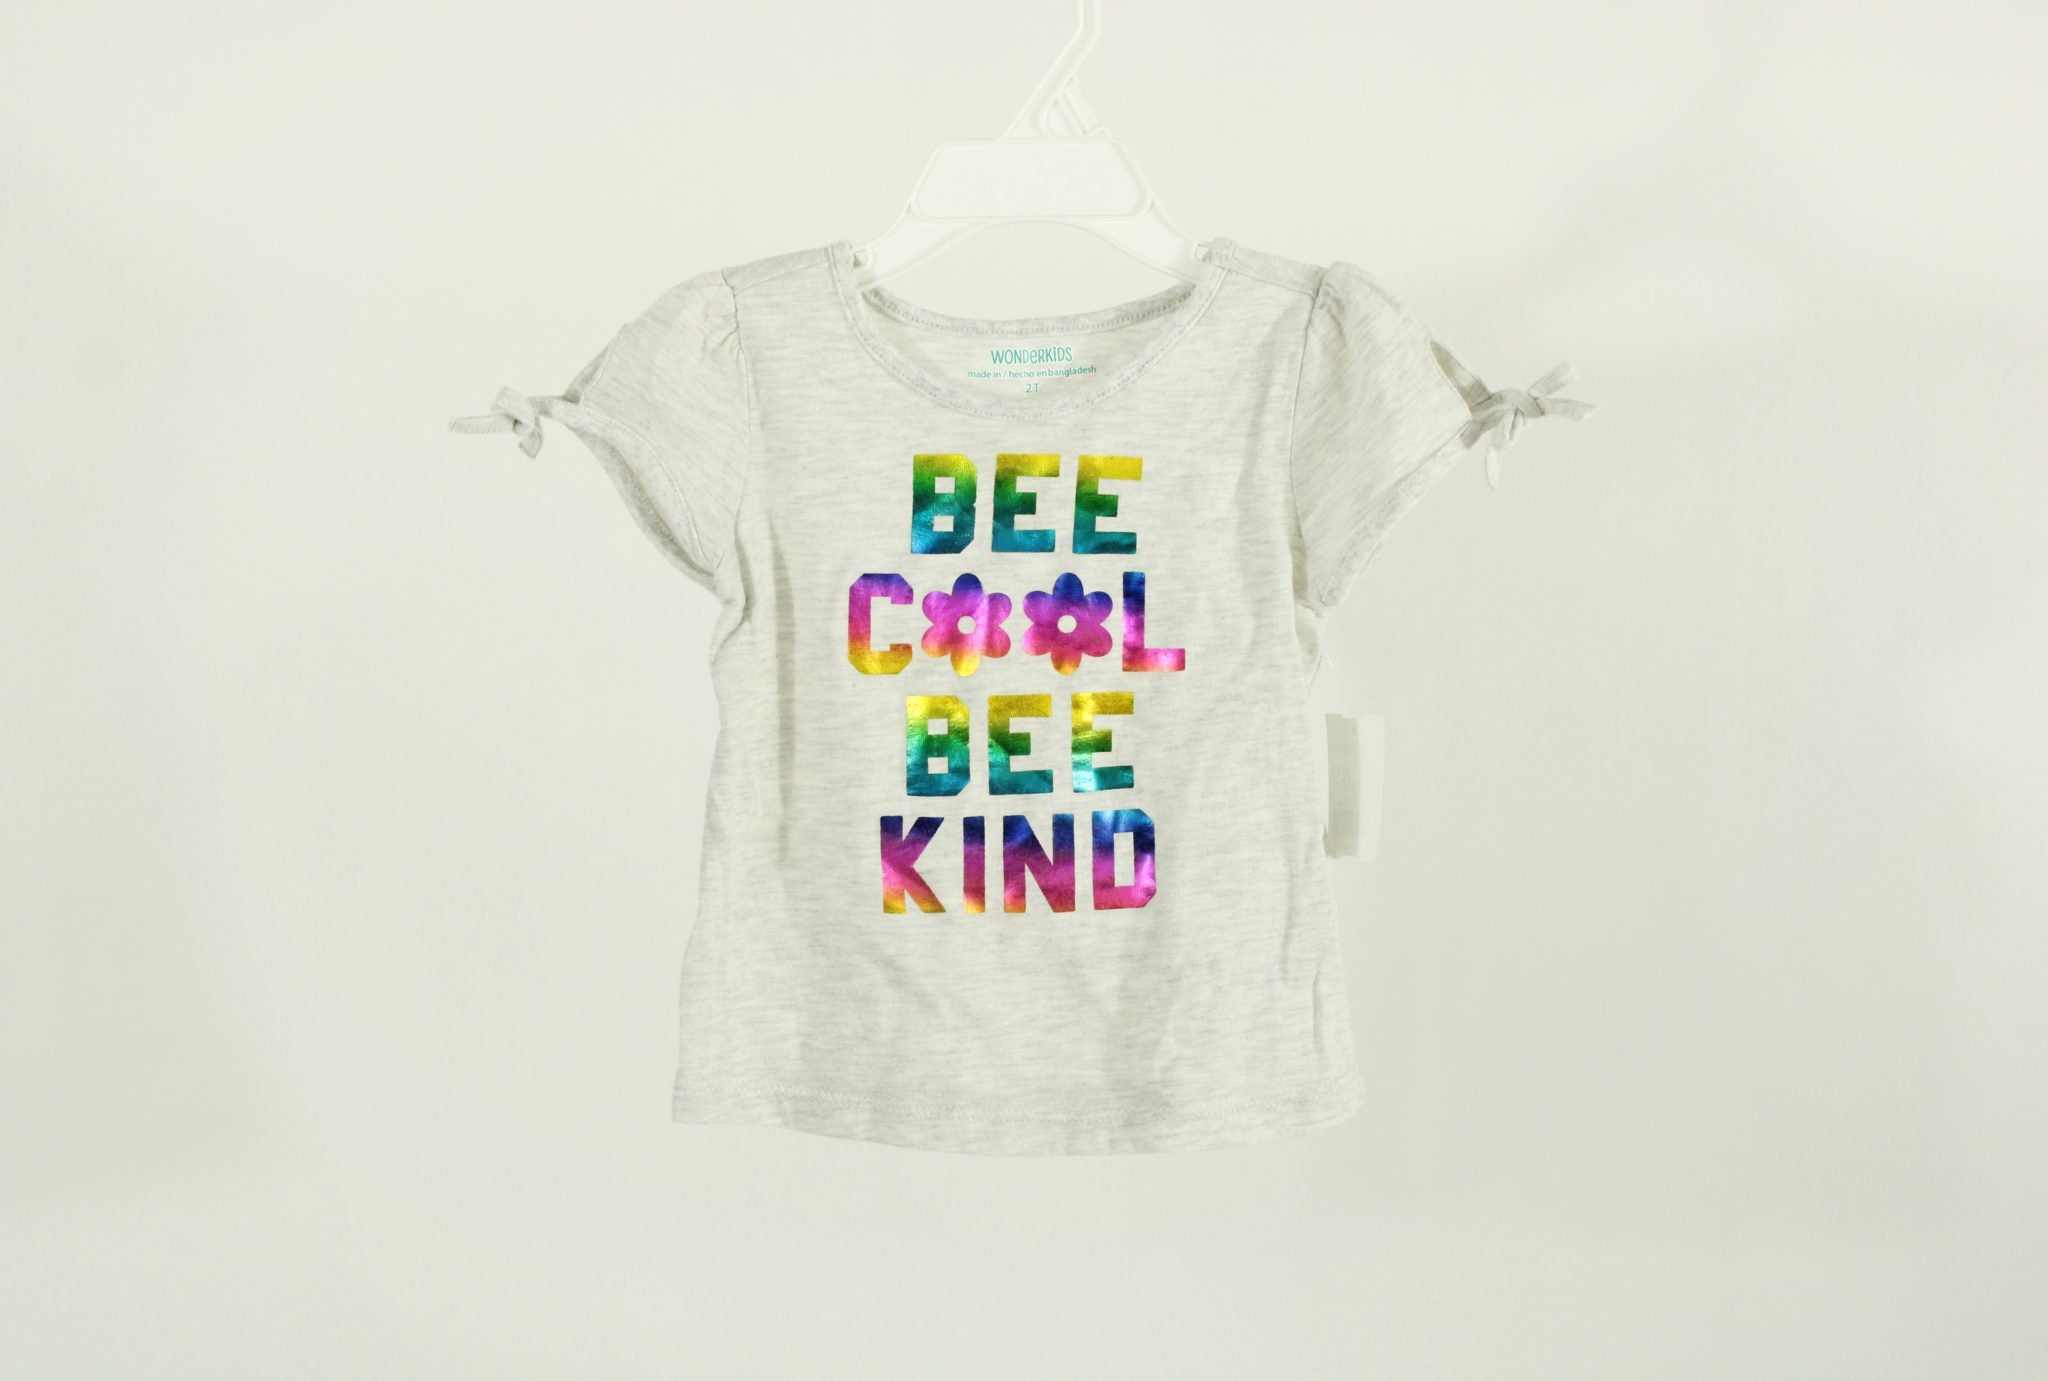 WonderKids "Bee Cool Bee Kind" Shirt | Size 2T